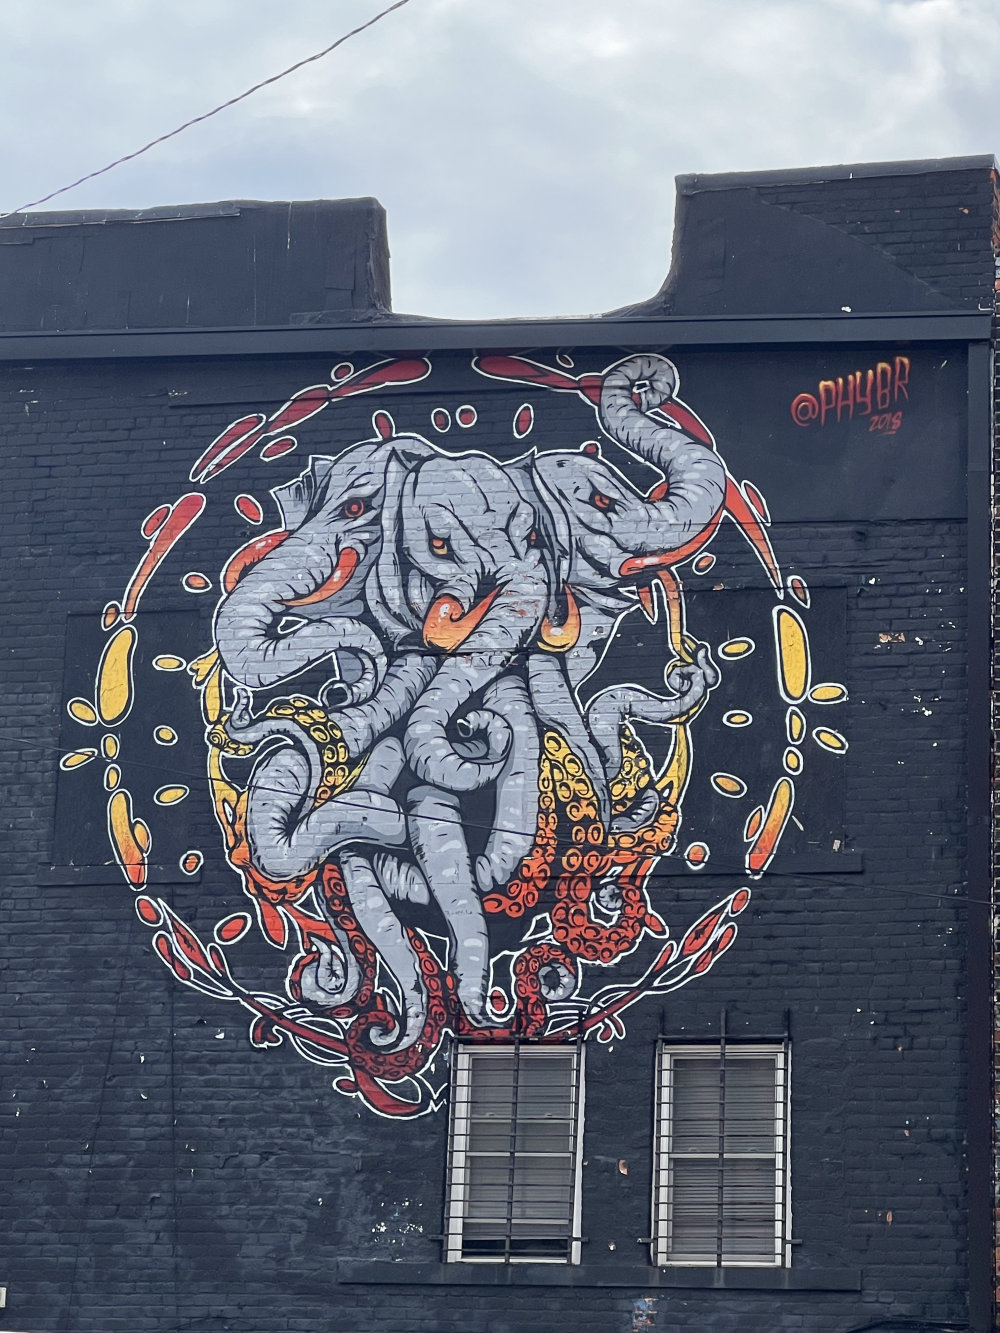 mural in Detroit by artist Phybr.